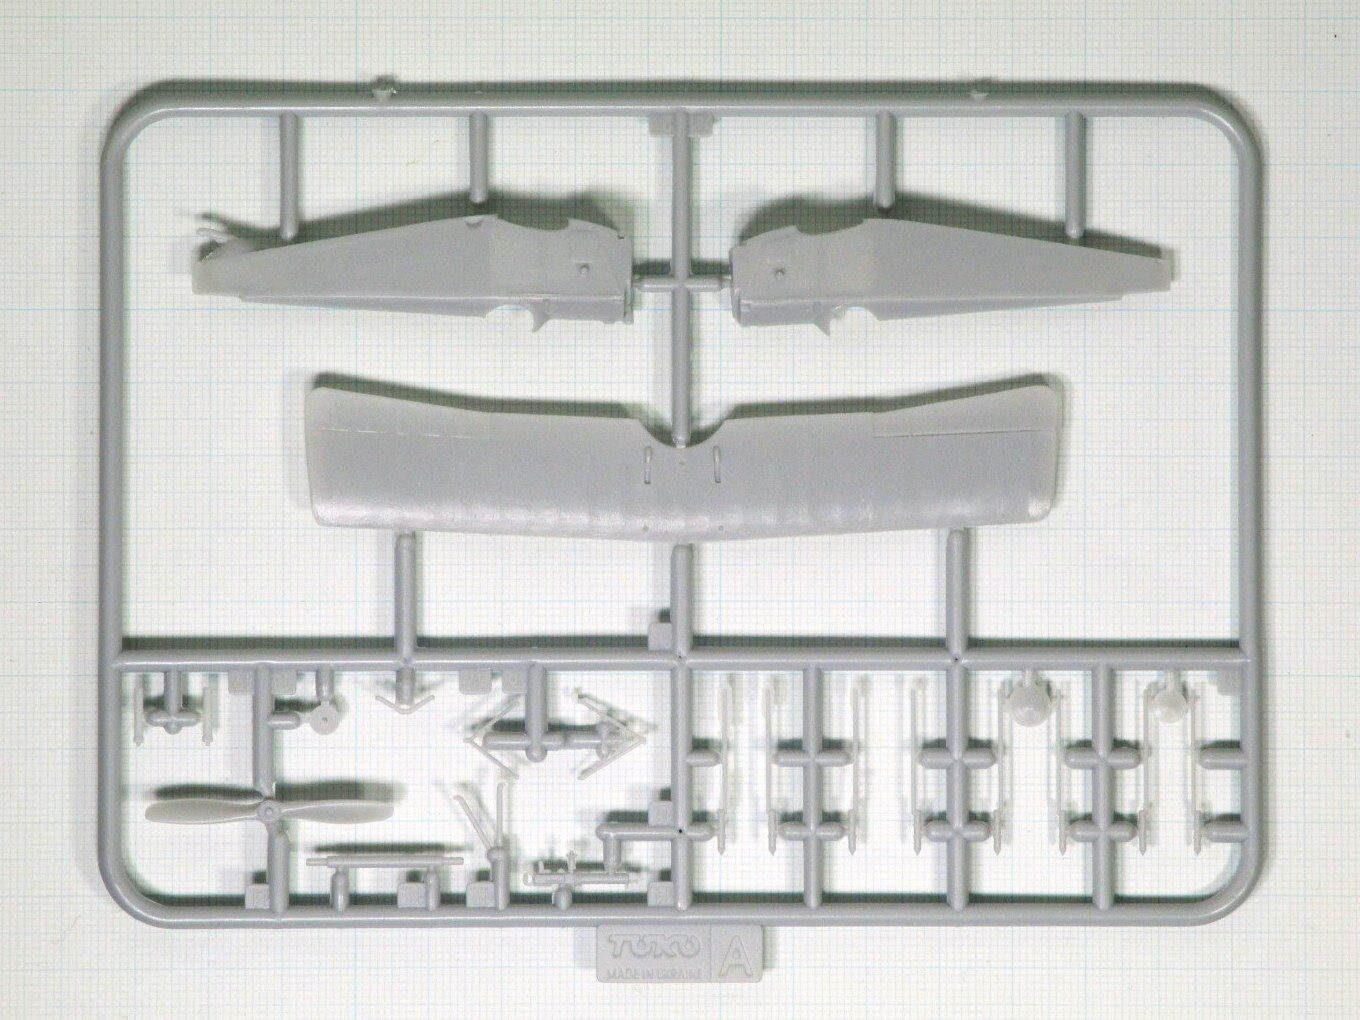 Toko 1/72 124 Nieuport 16c | Encyclopedia of Scale Models Wiki